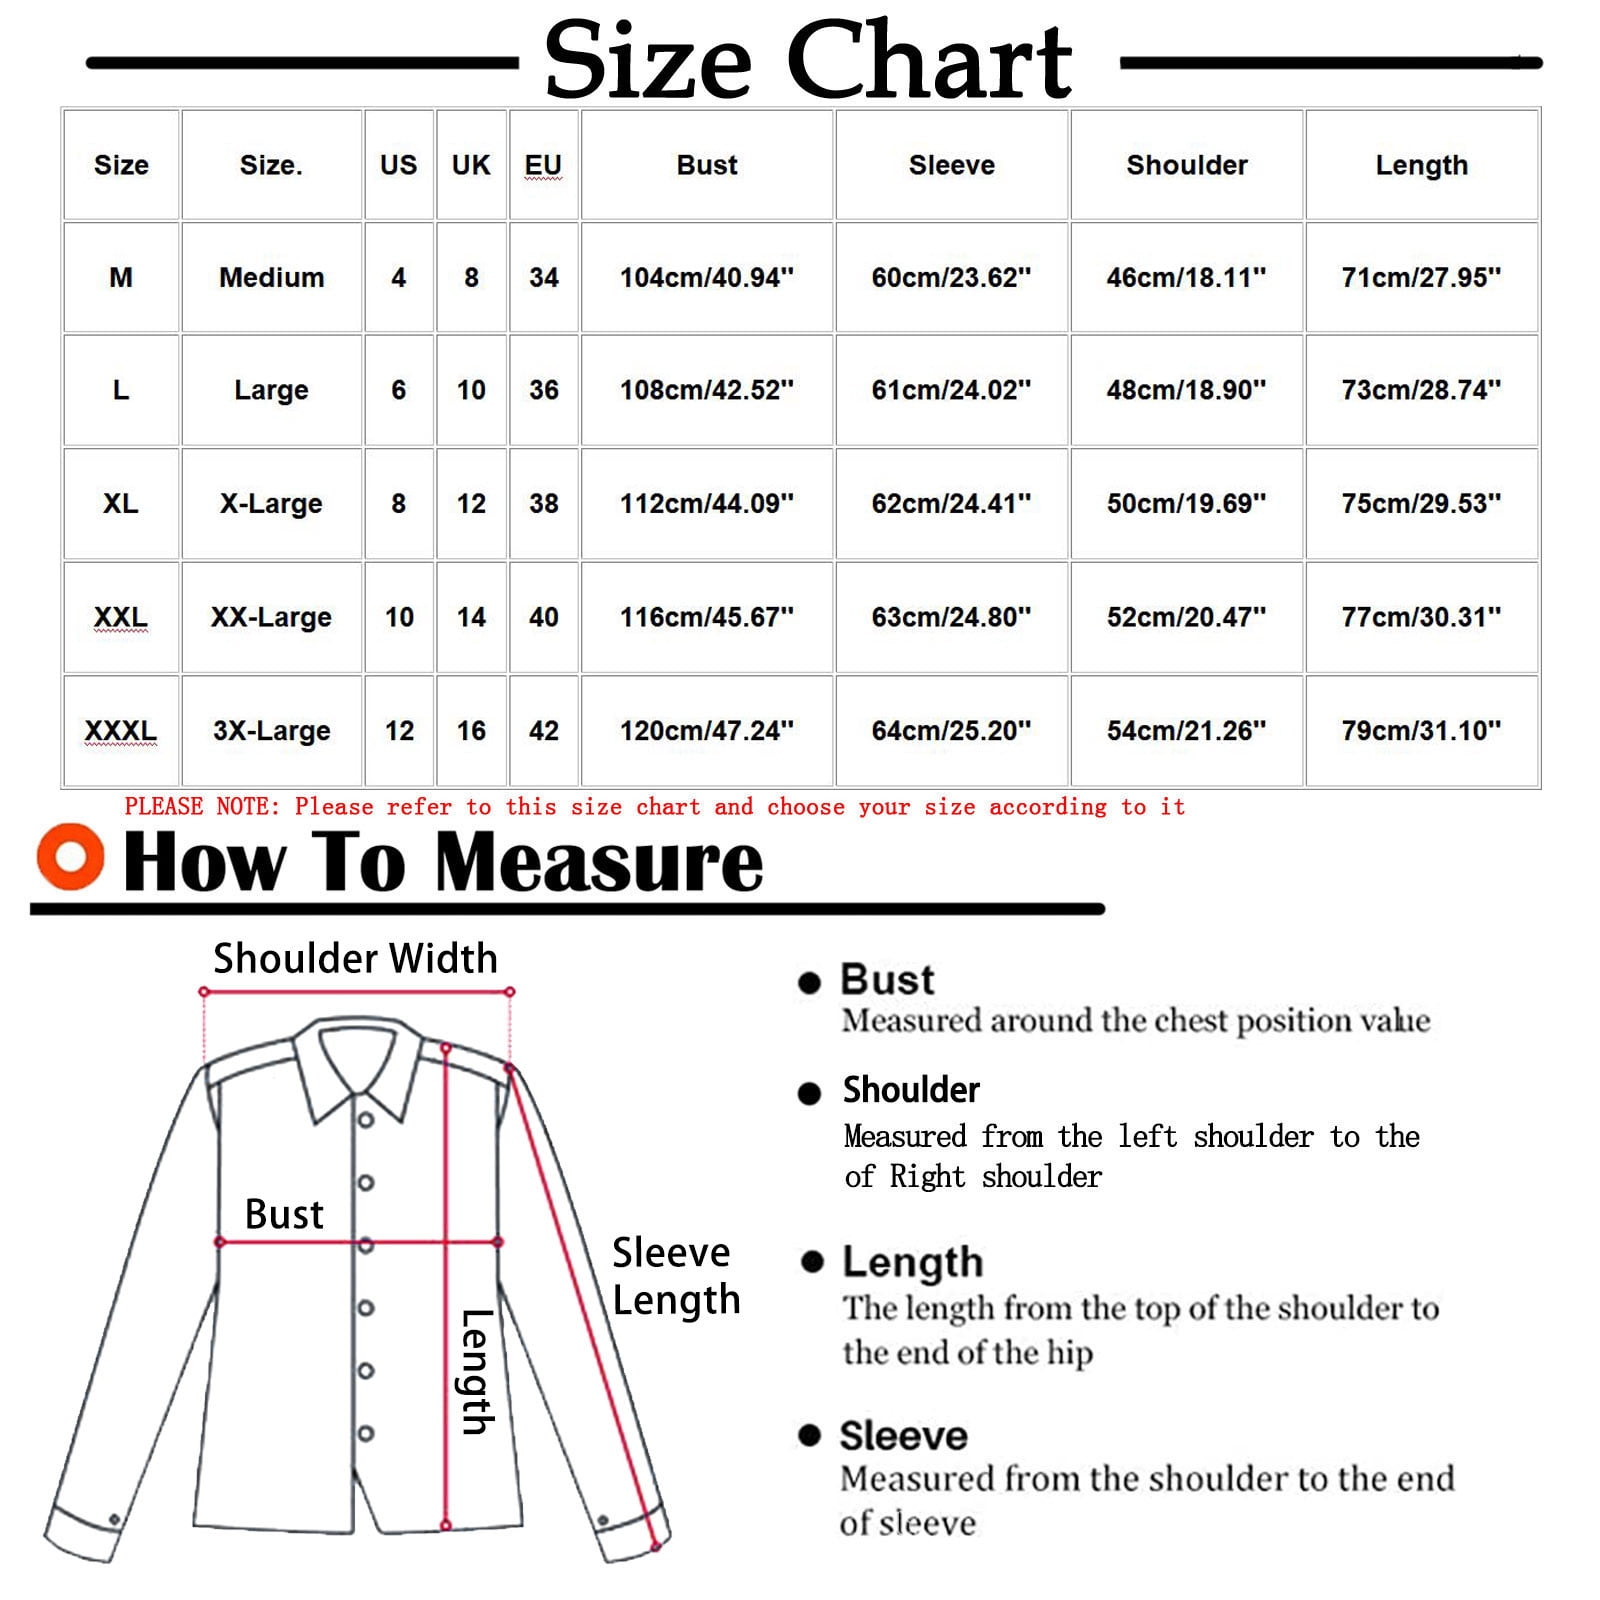 men’s dress shirt sizes